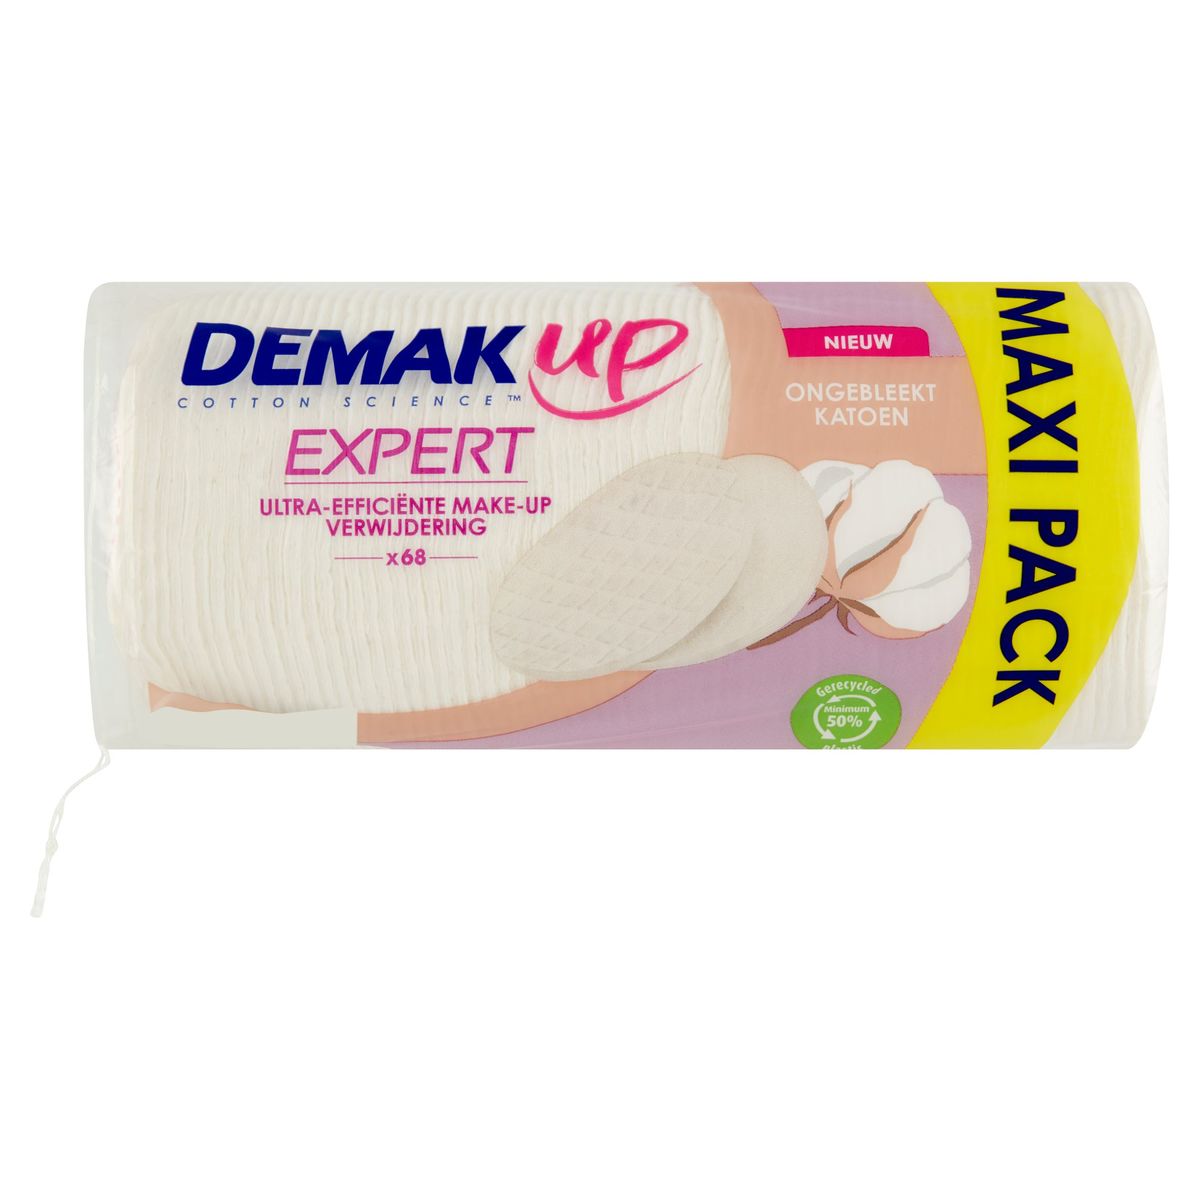 Demak'Up Expert Démaquillage Ultra-Efficace Maxi Pack 68 Pièces